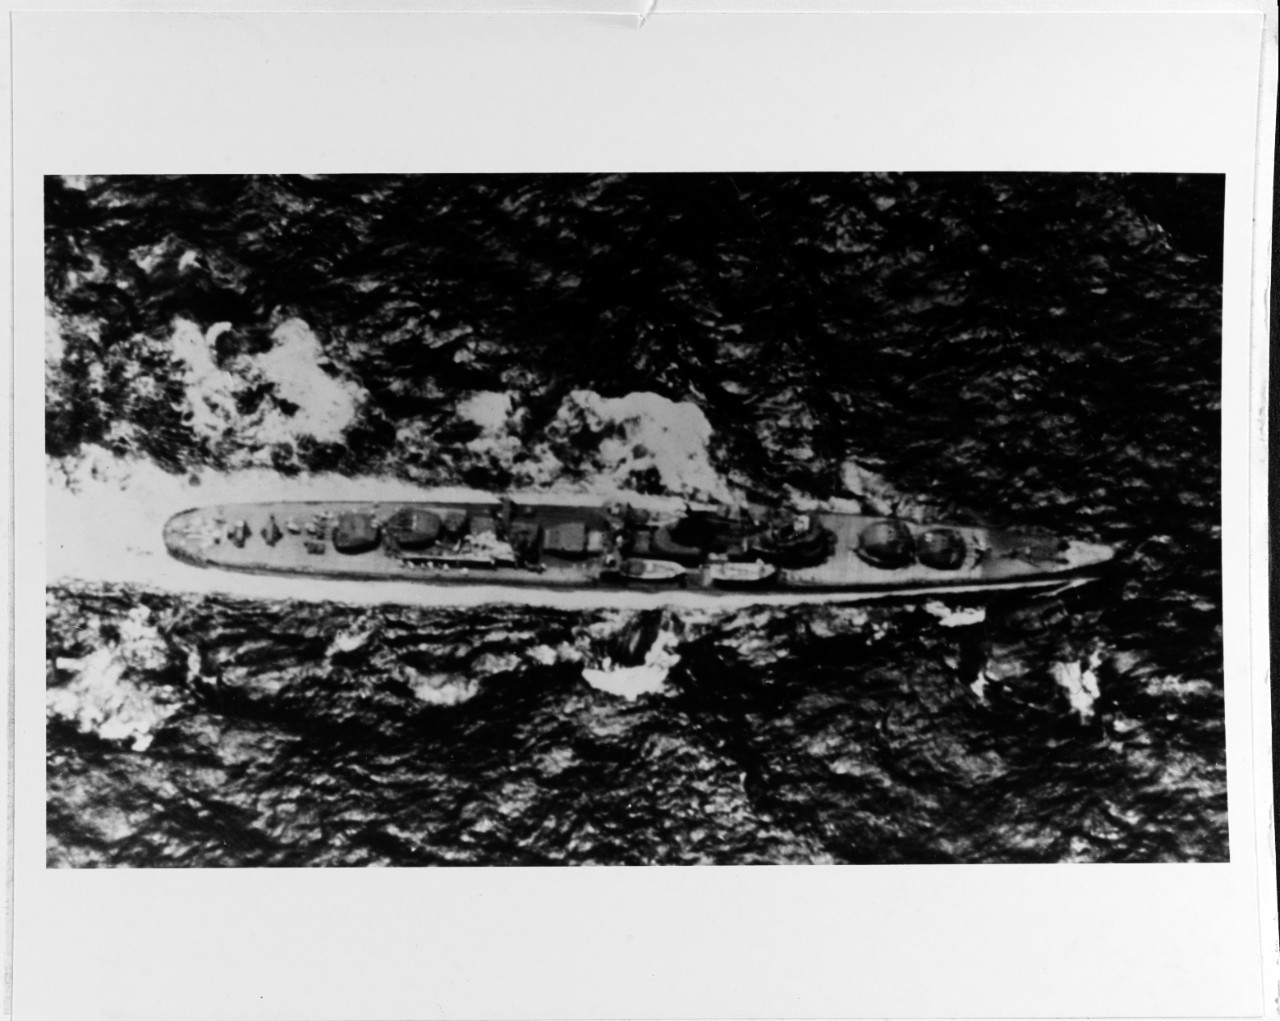 AKIZUKI class (Japanese destroyer class, 1941-1963)